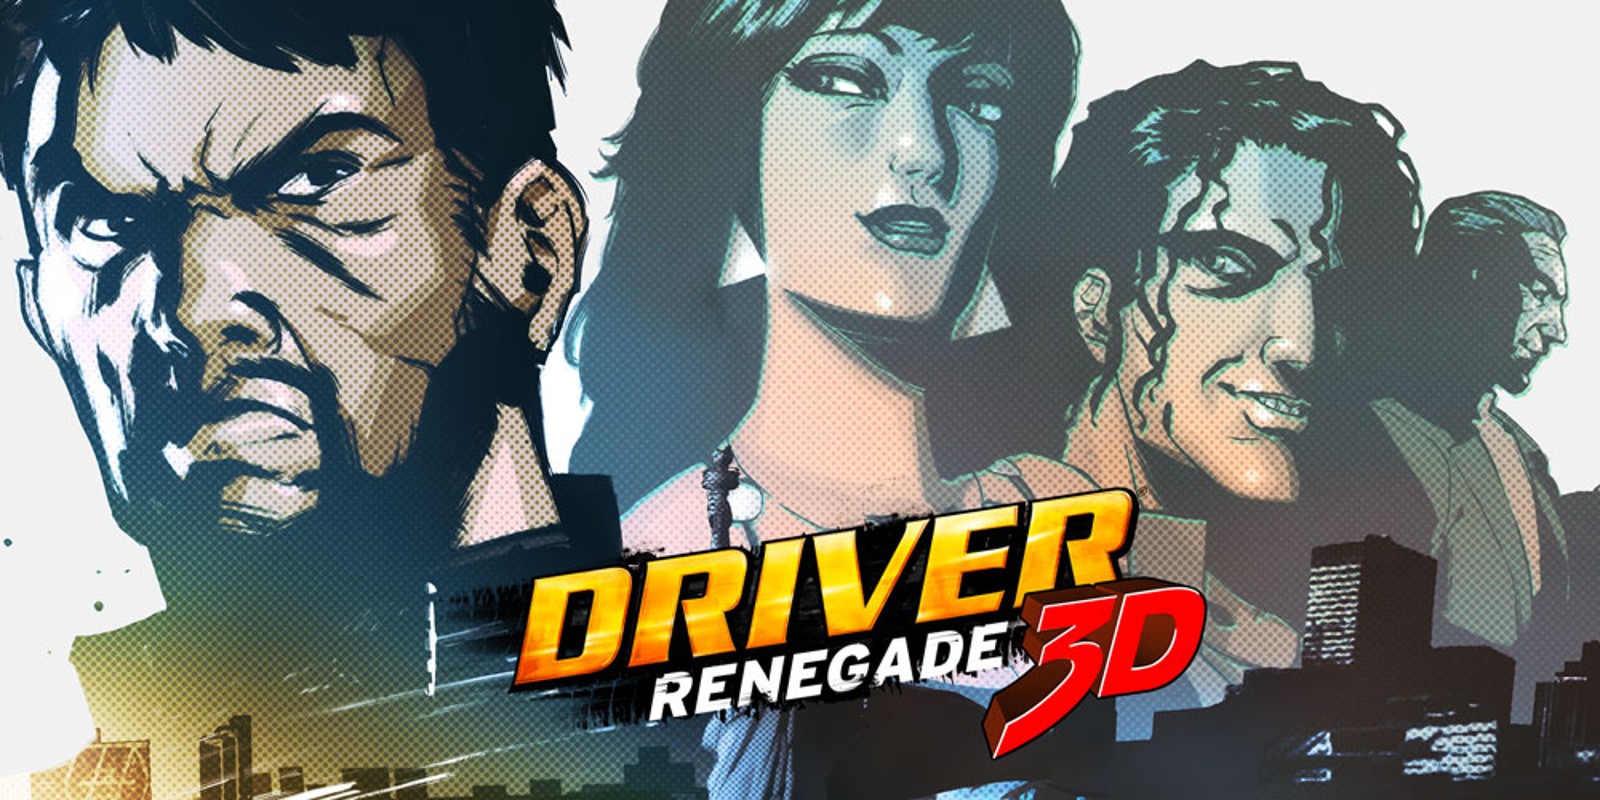 Driver nintendo. Driver: Renegade 3d. Driver Renegade 3ds. Driver: Renegade Driver: Renegade 3d. Driver Renegade 3d 3ds.